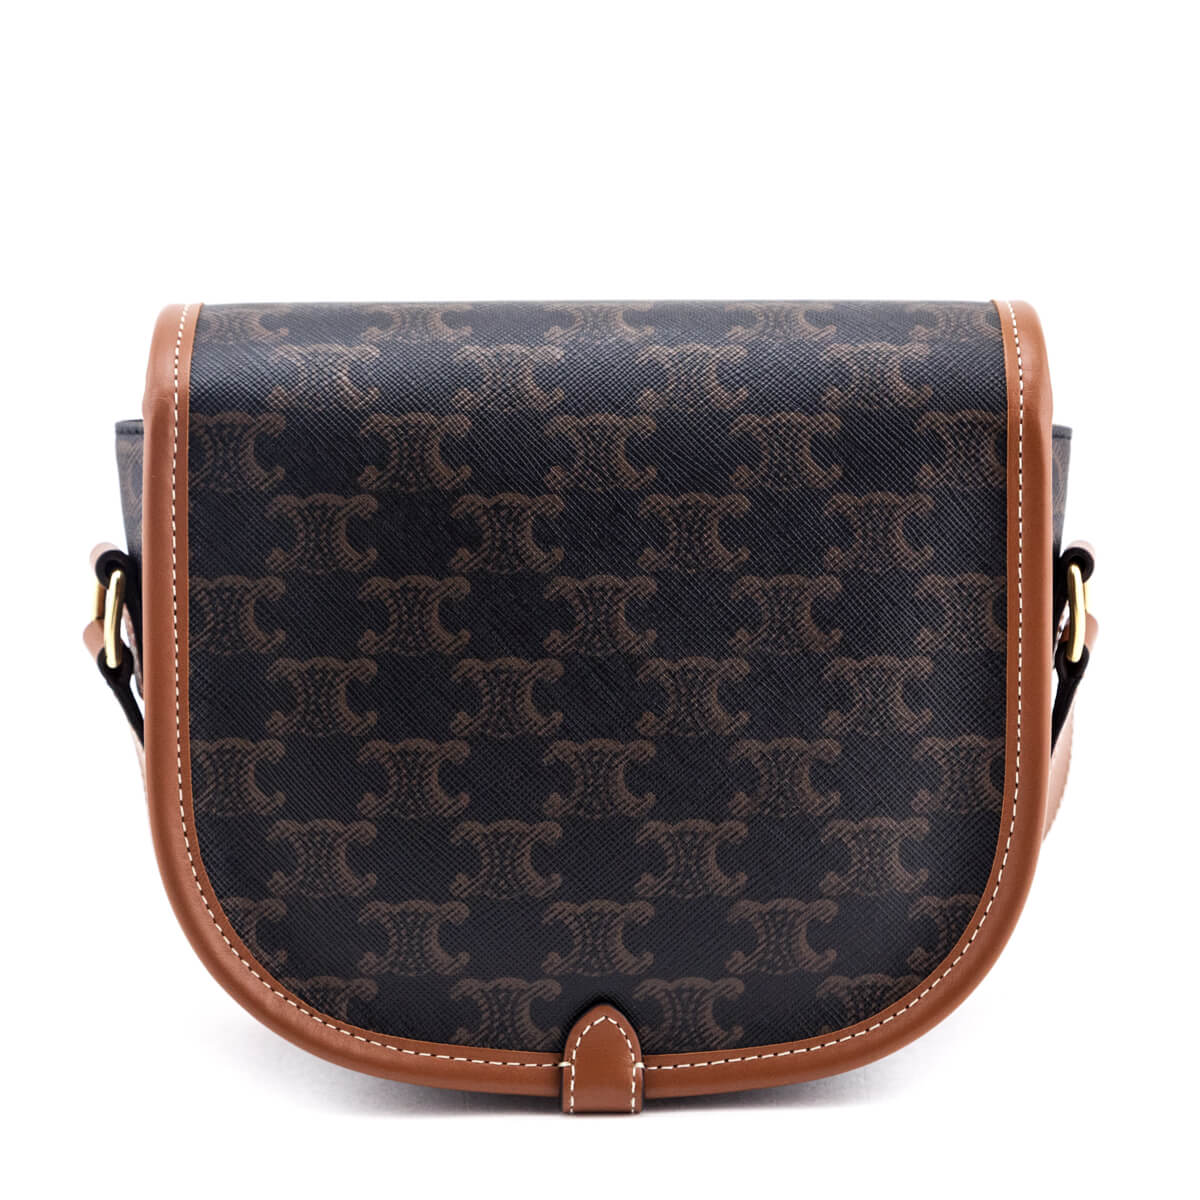 Celine Authenticated Folco Leather Handbag